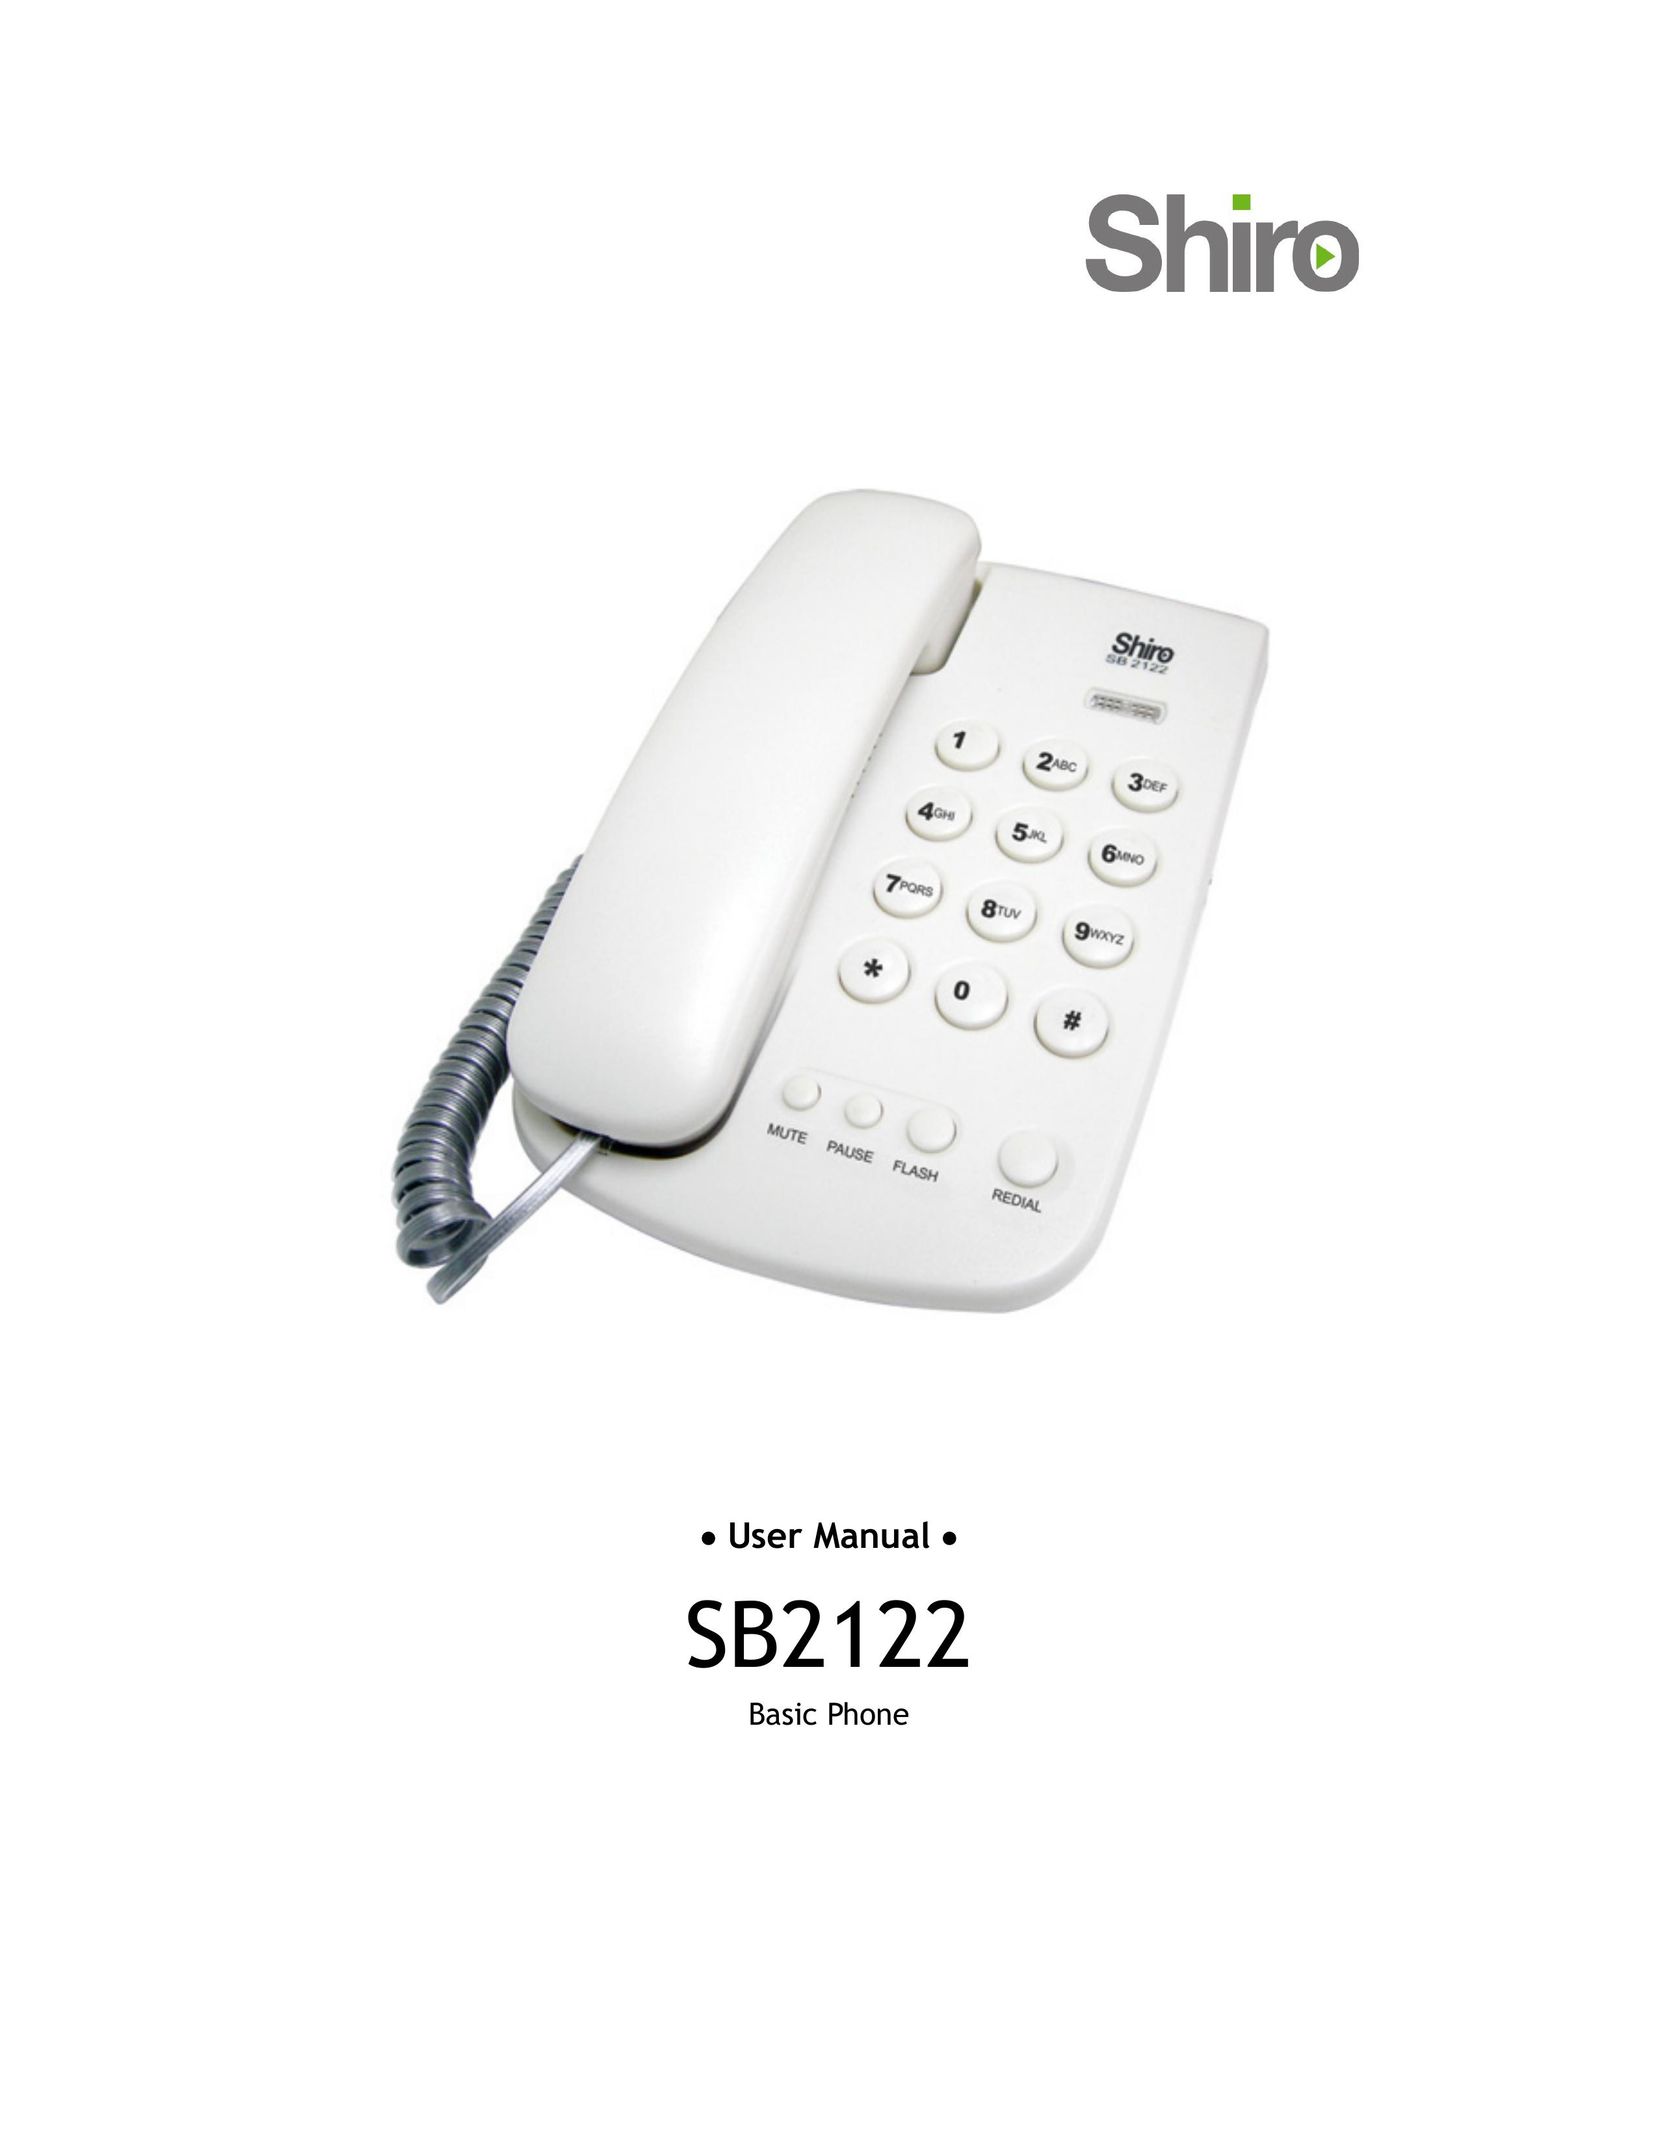 Shiro SB2122 Telephone User Manual